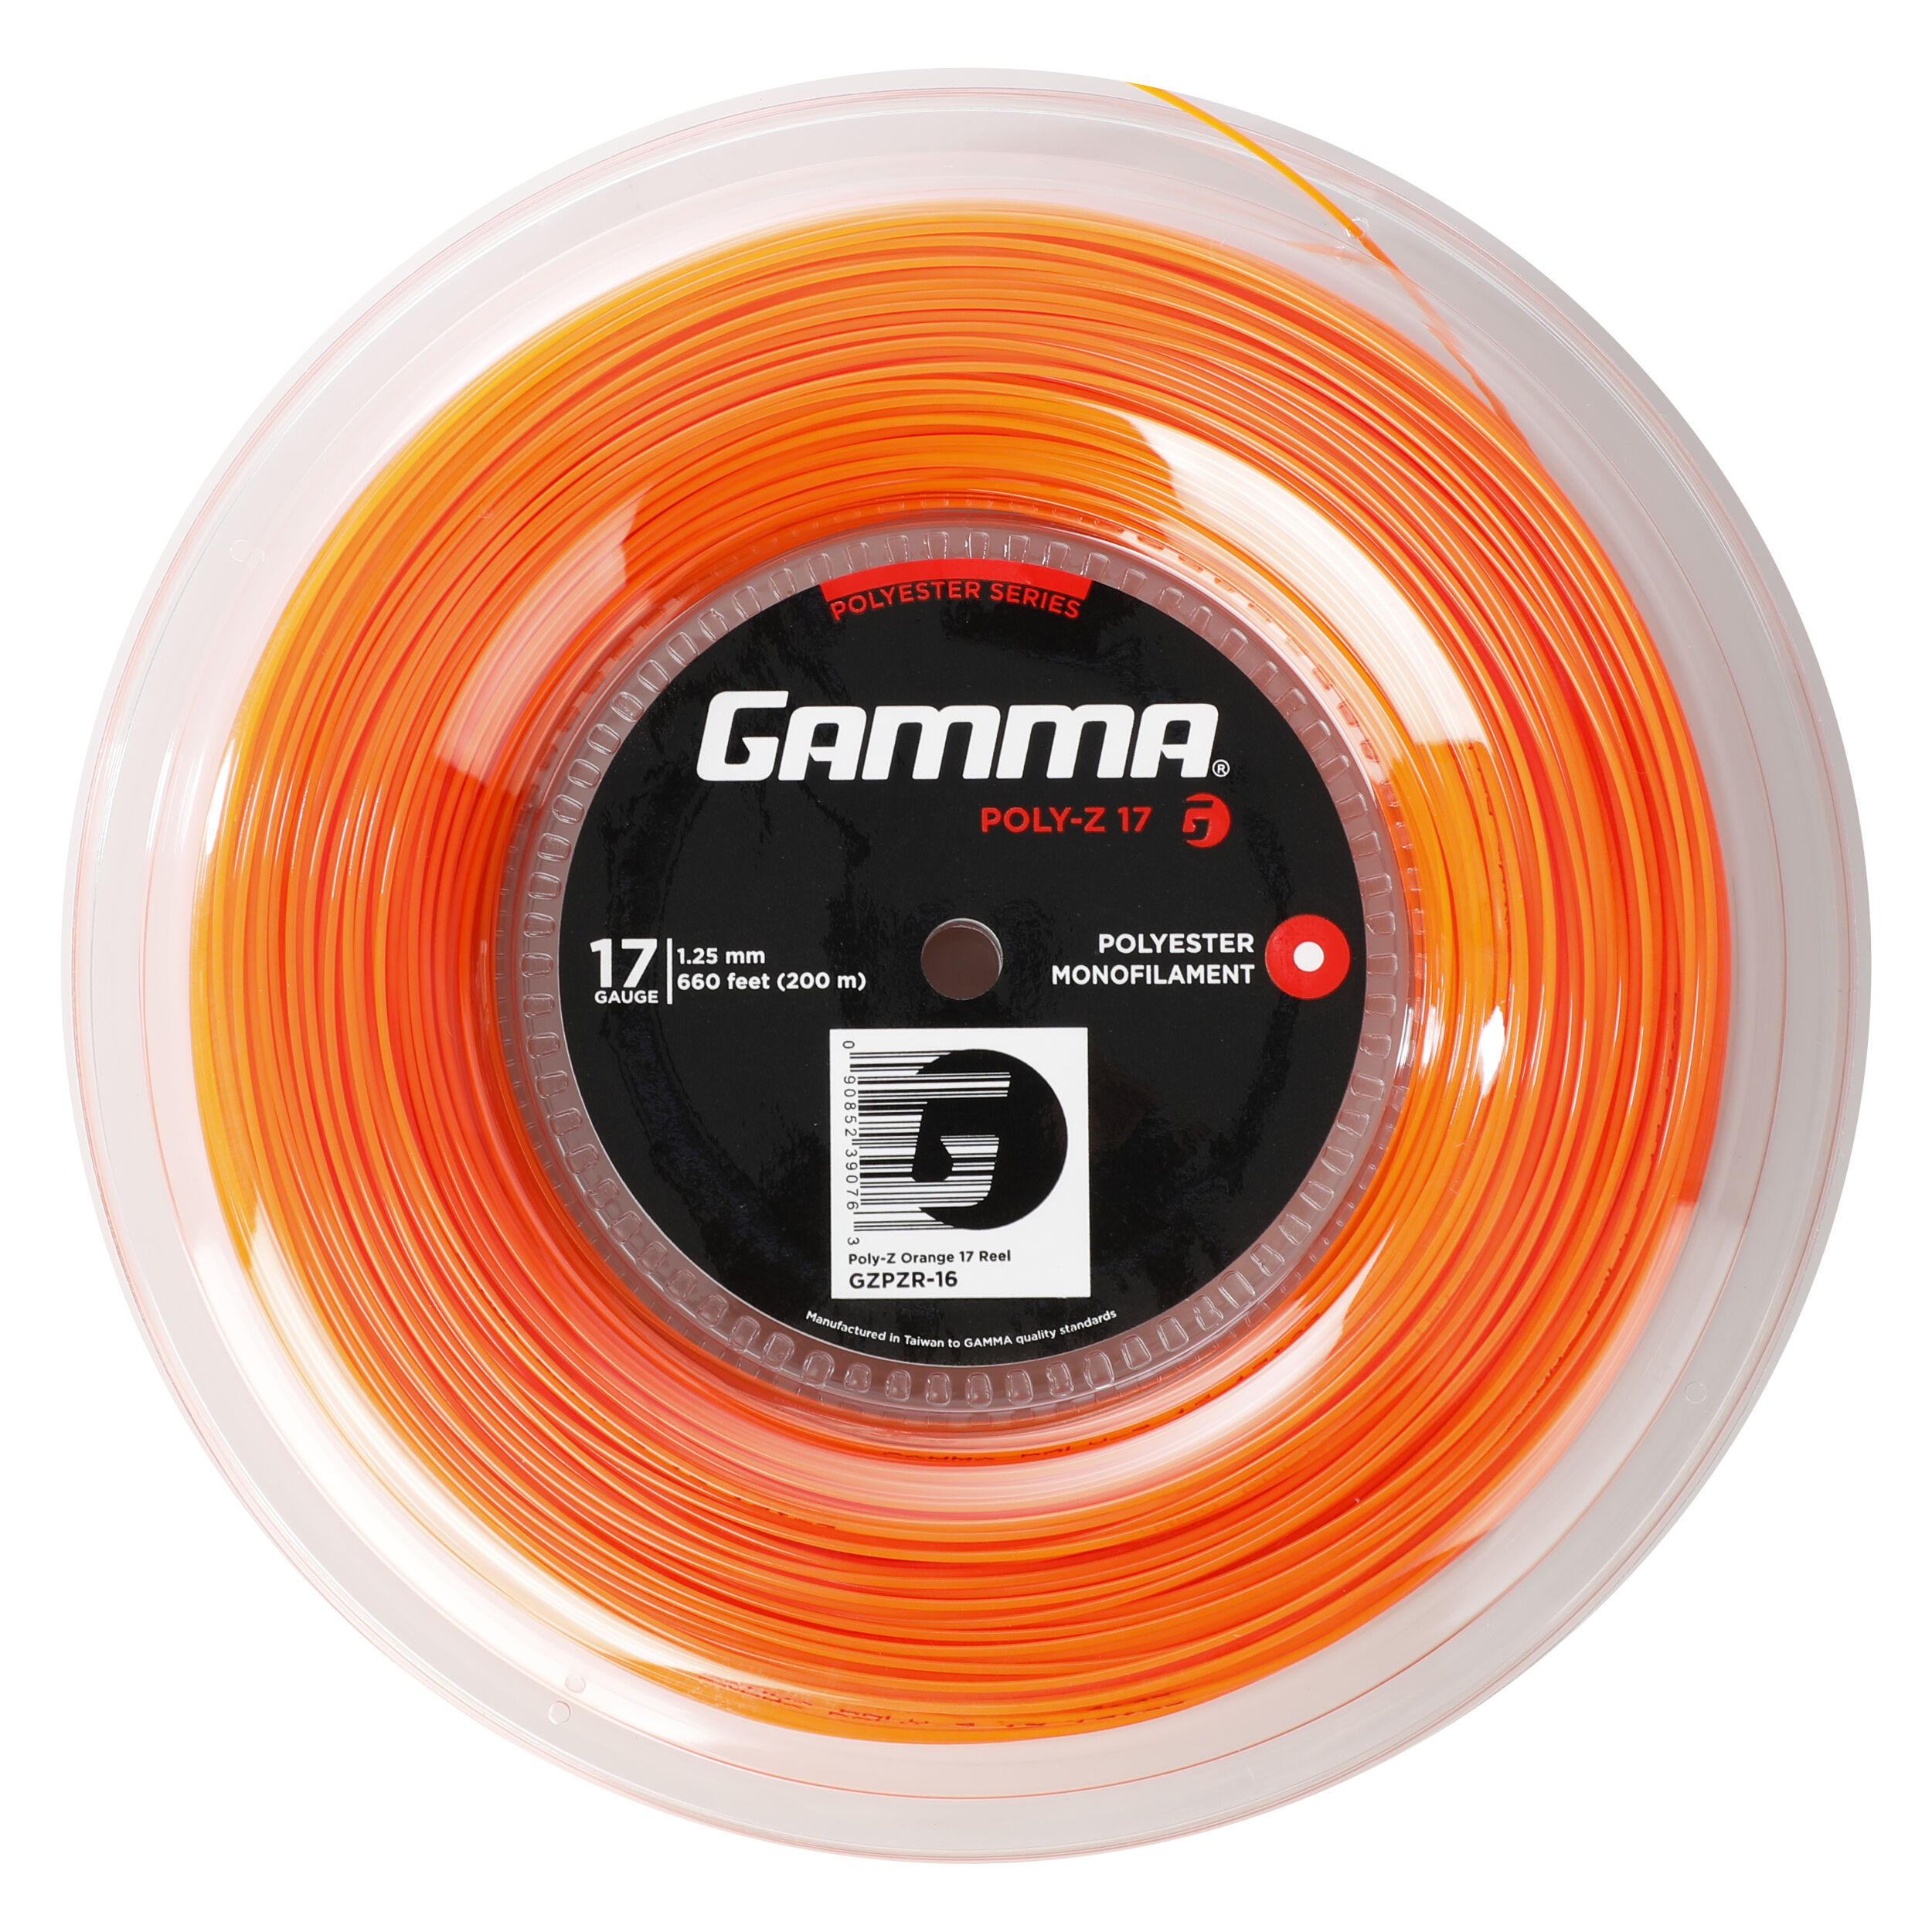 Gamma Io Soft 200M Charcoal Tennis Saitenrolle 200m Grau 1,23 NEU 